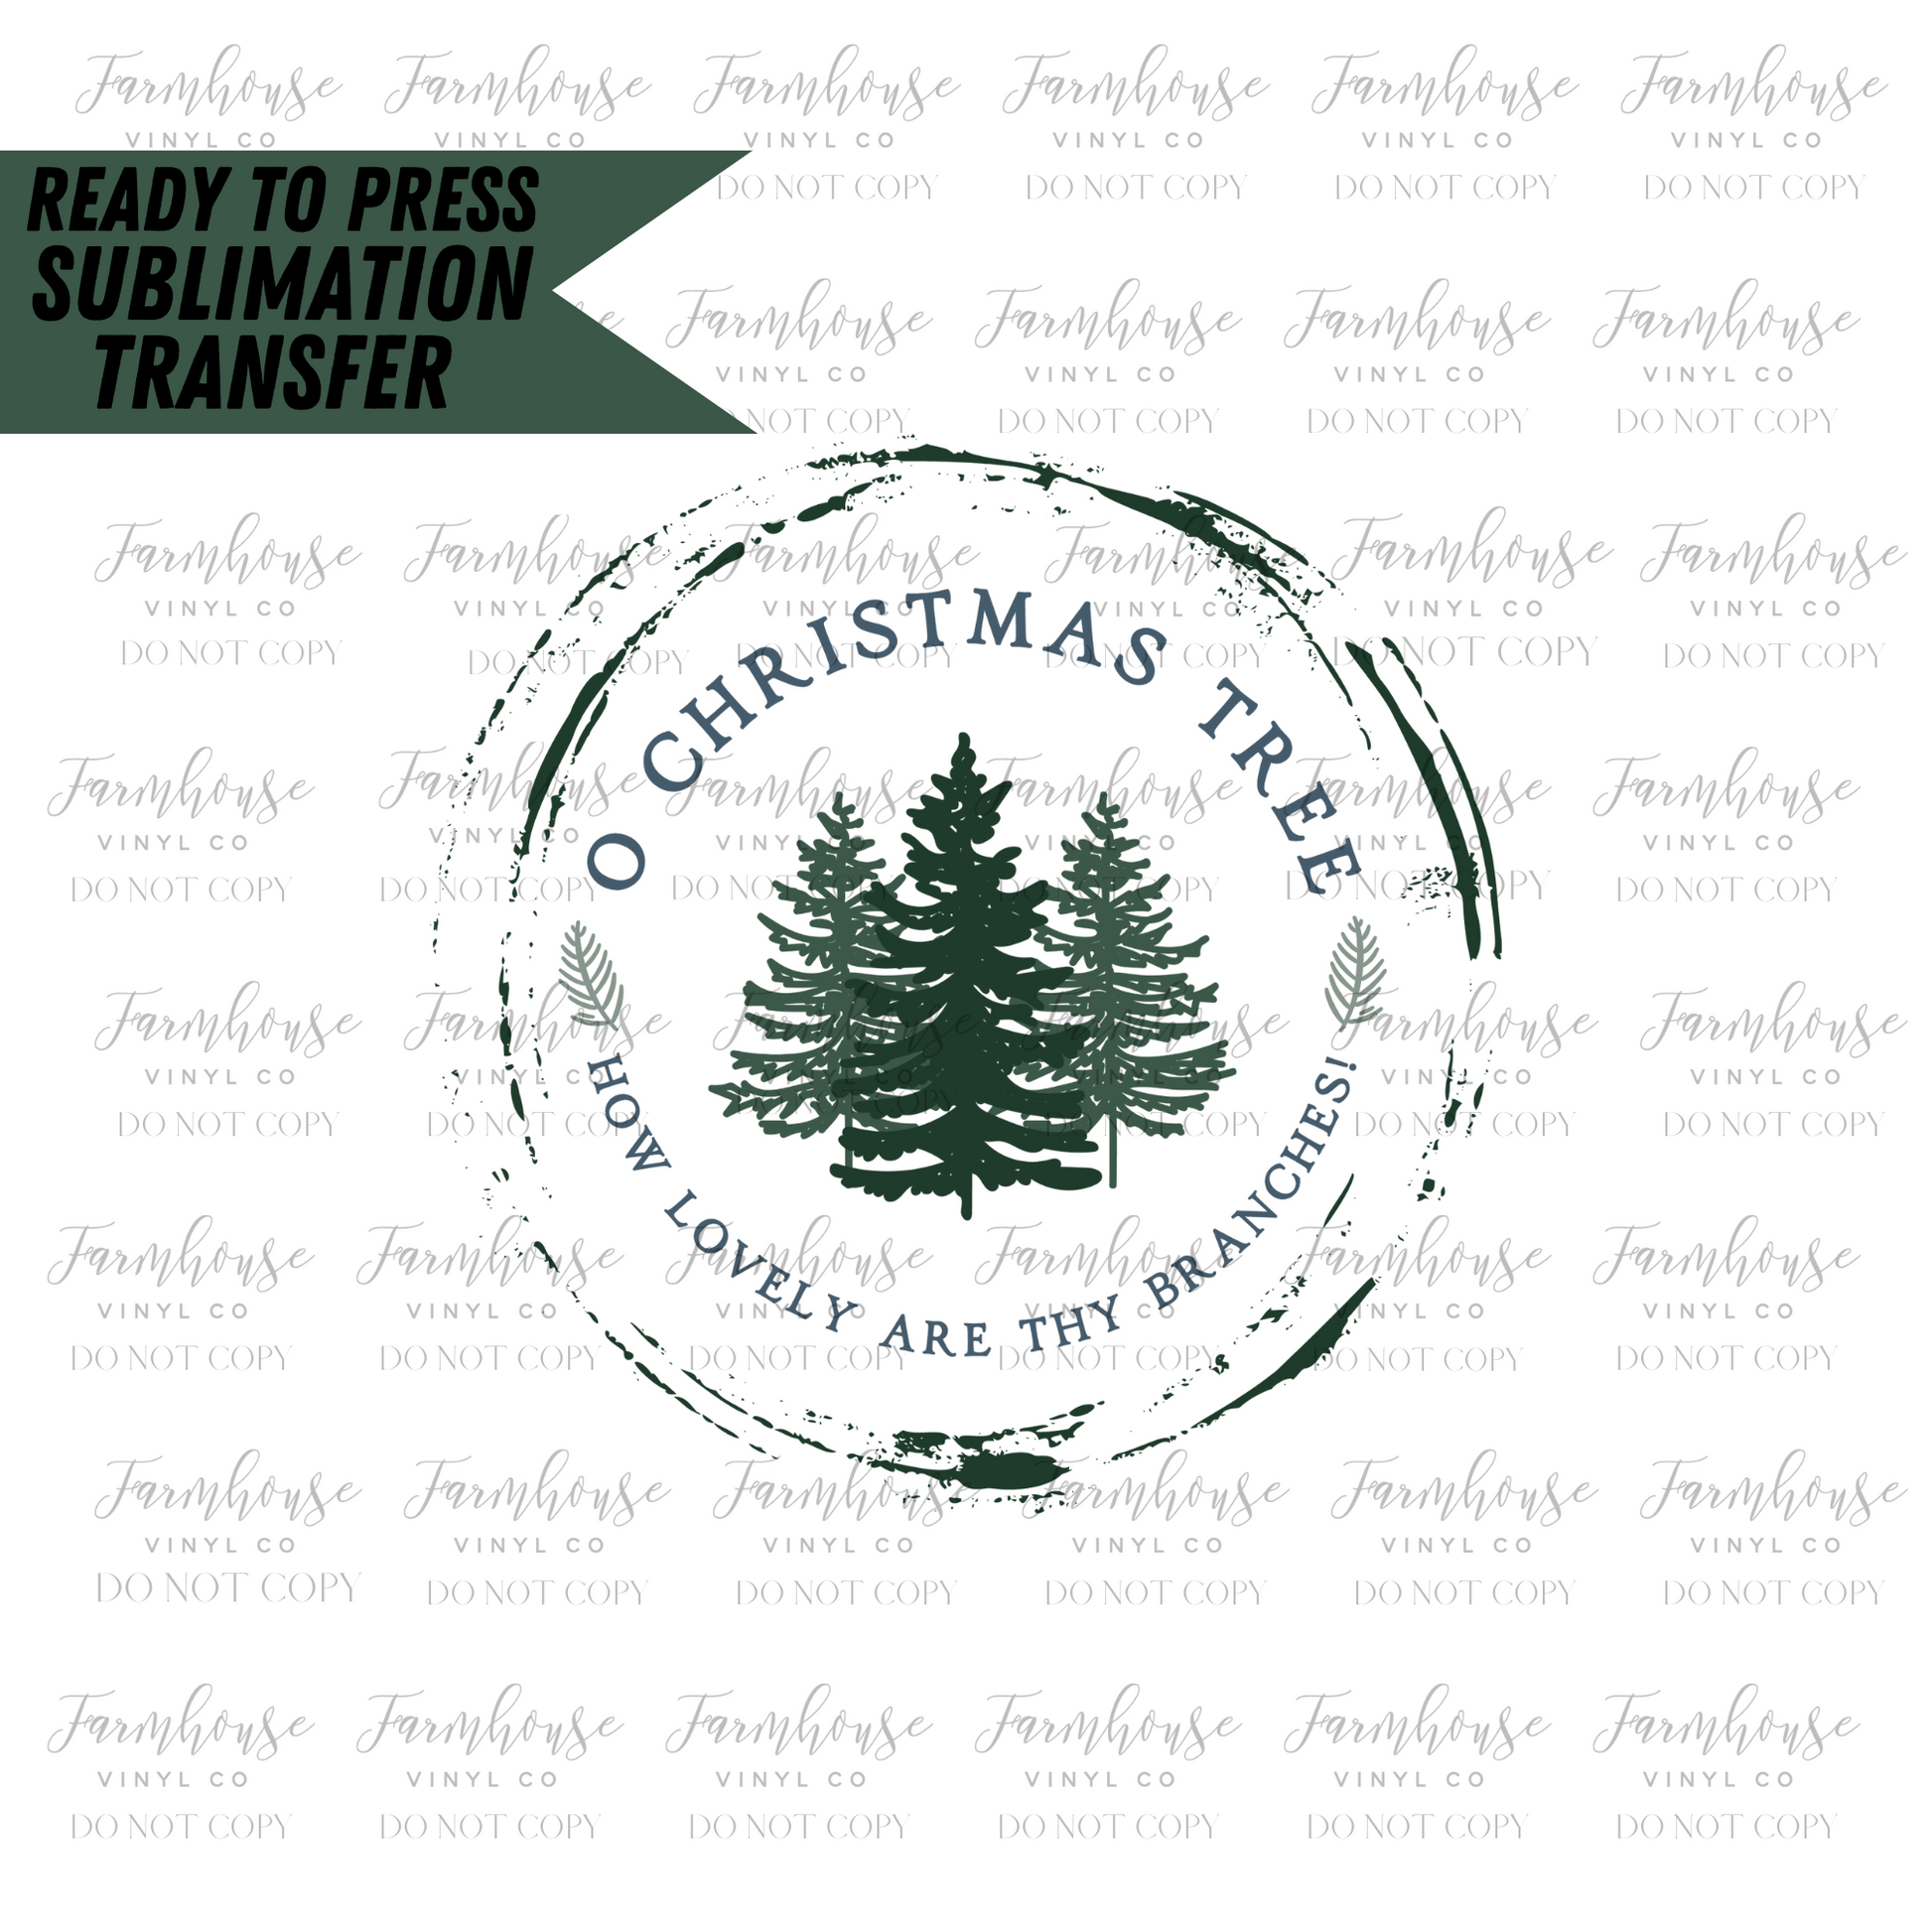 O Christmas Tree Ready To Press Sublimation Transfer - Farmhouse Vinyl Co